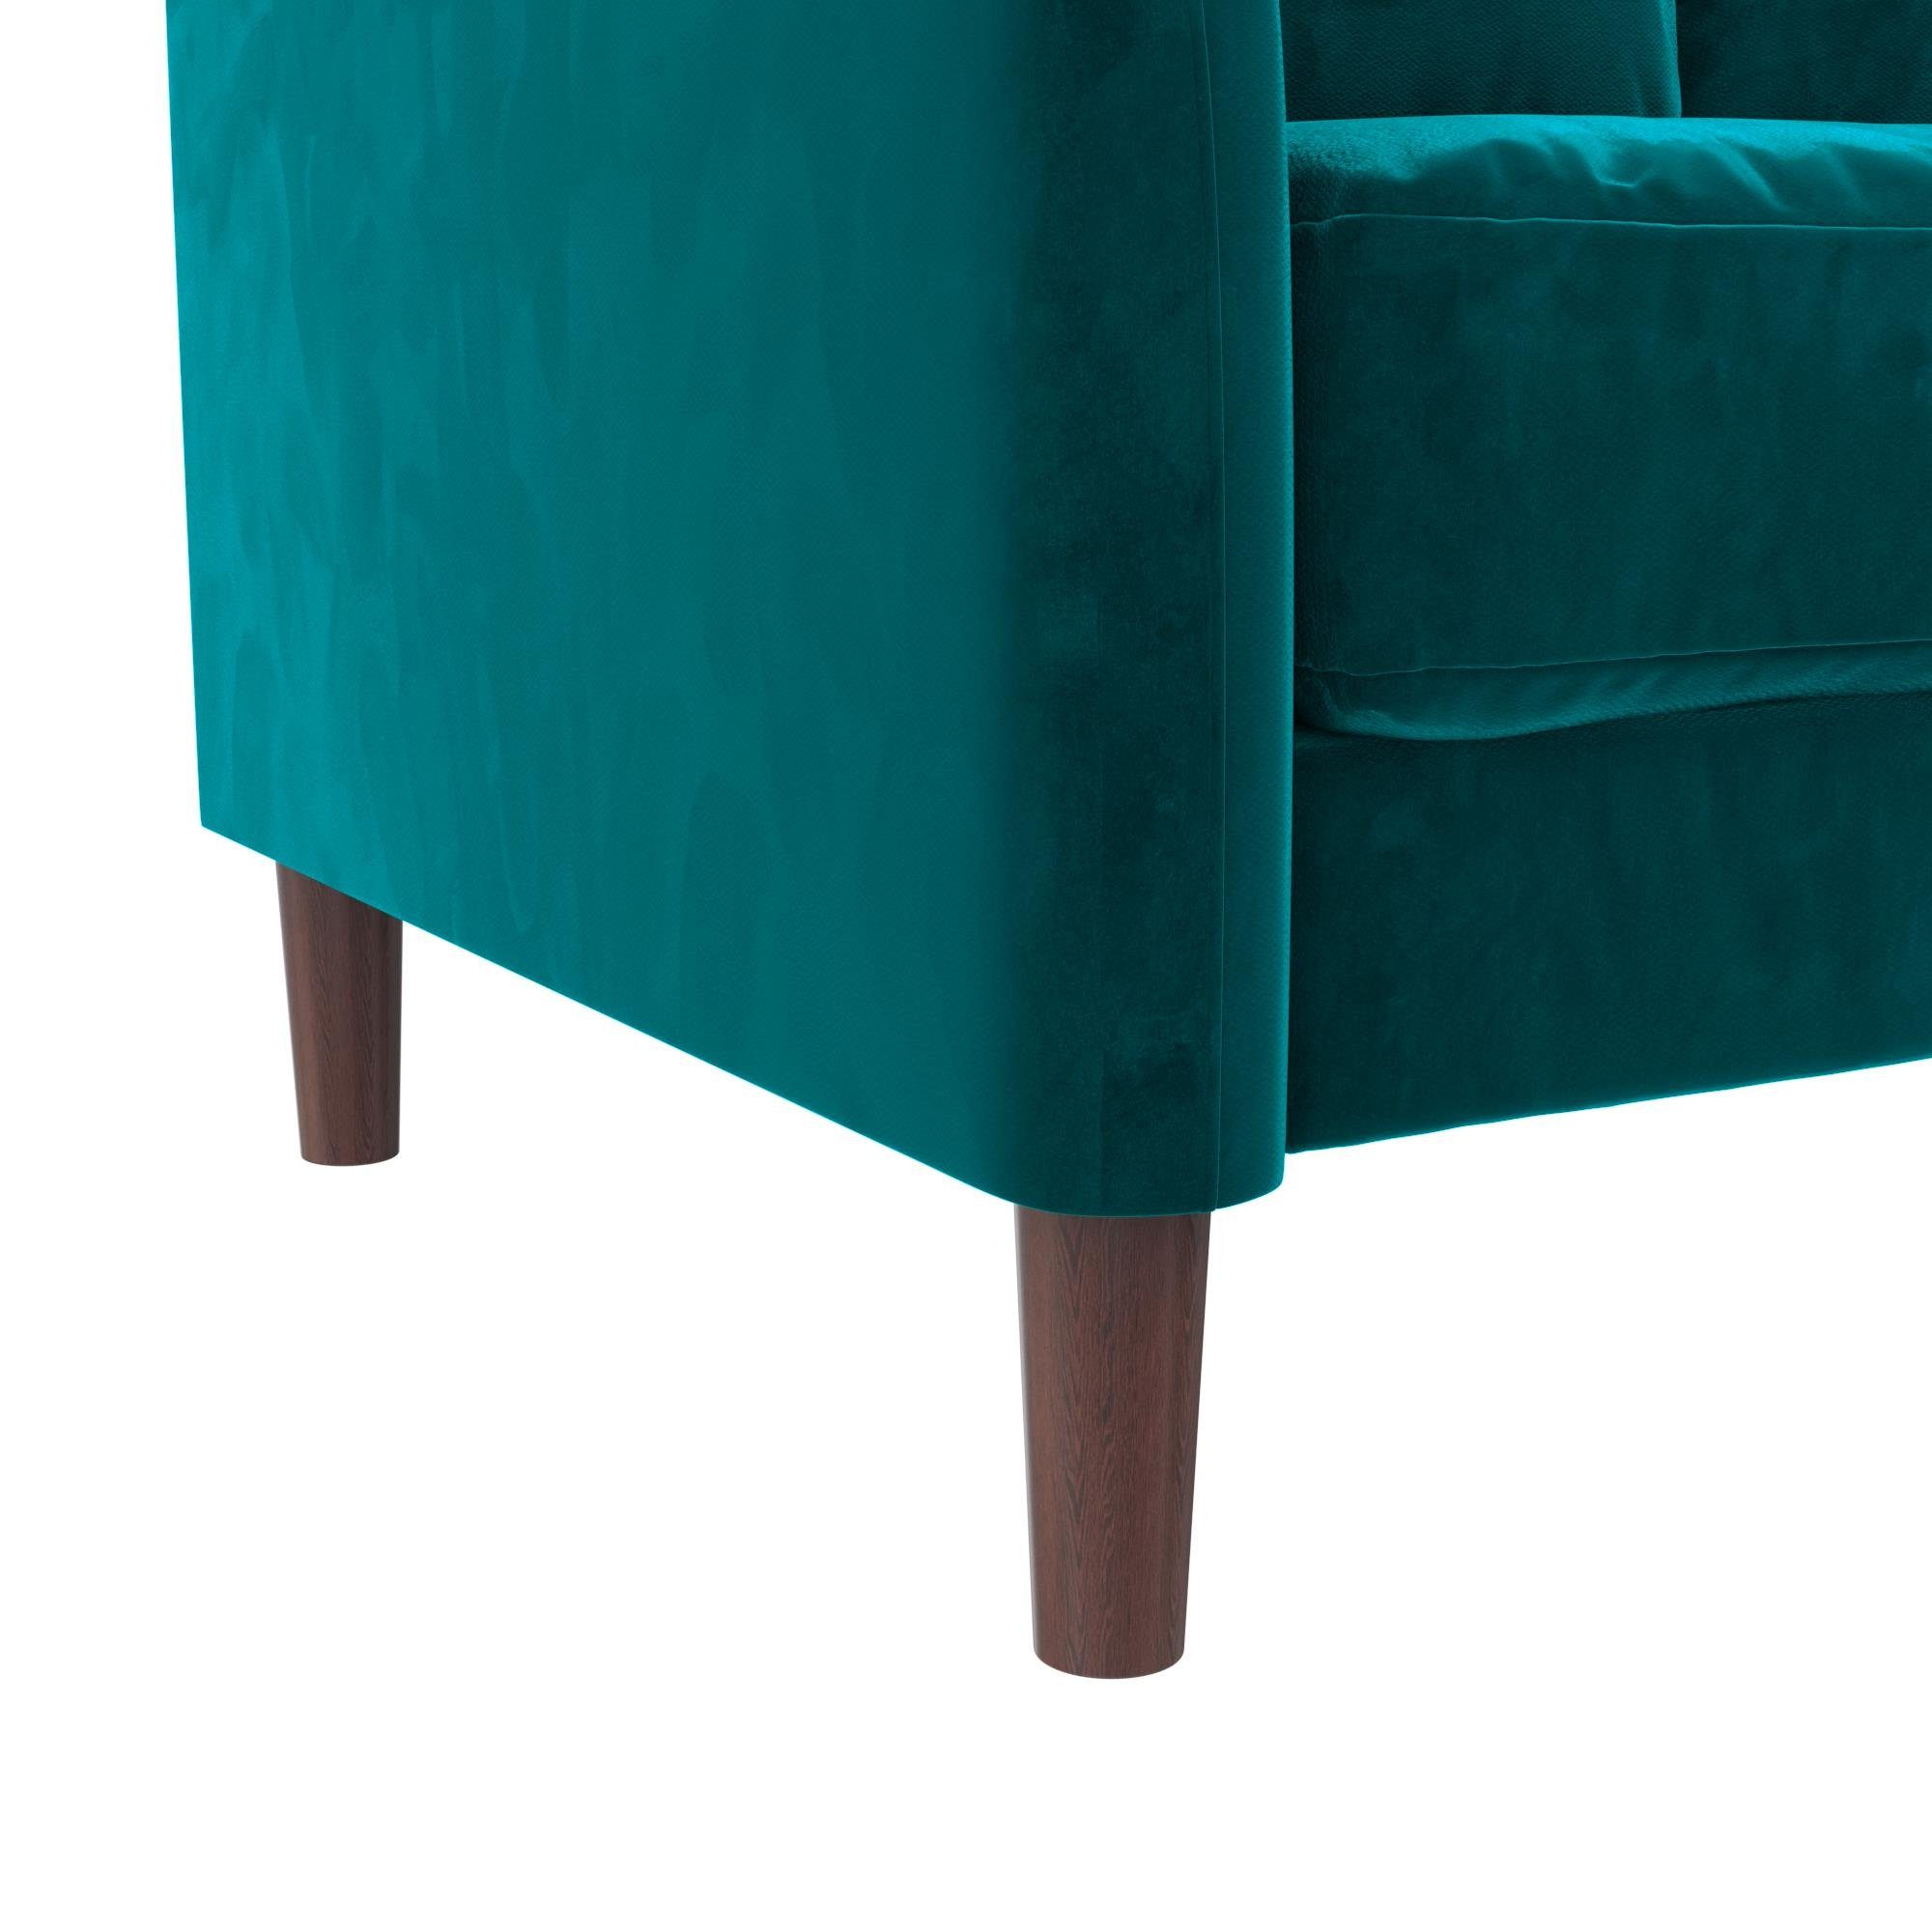 loft24 Sofa cm Couch, Samtoptik, Marbella, grün in Bezug 188 Länge 3-Sitzer